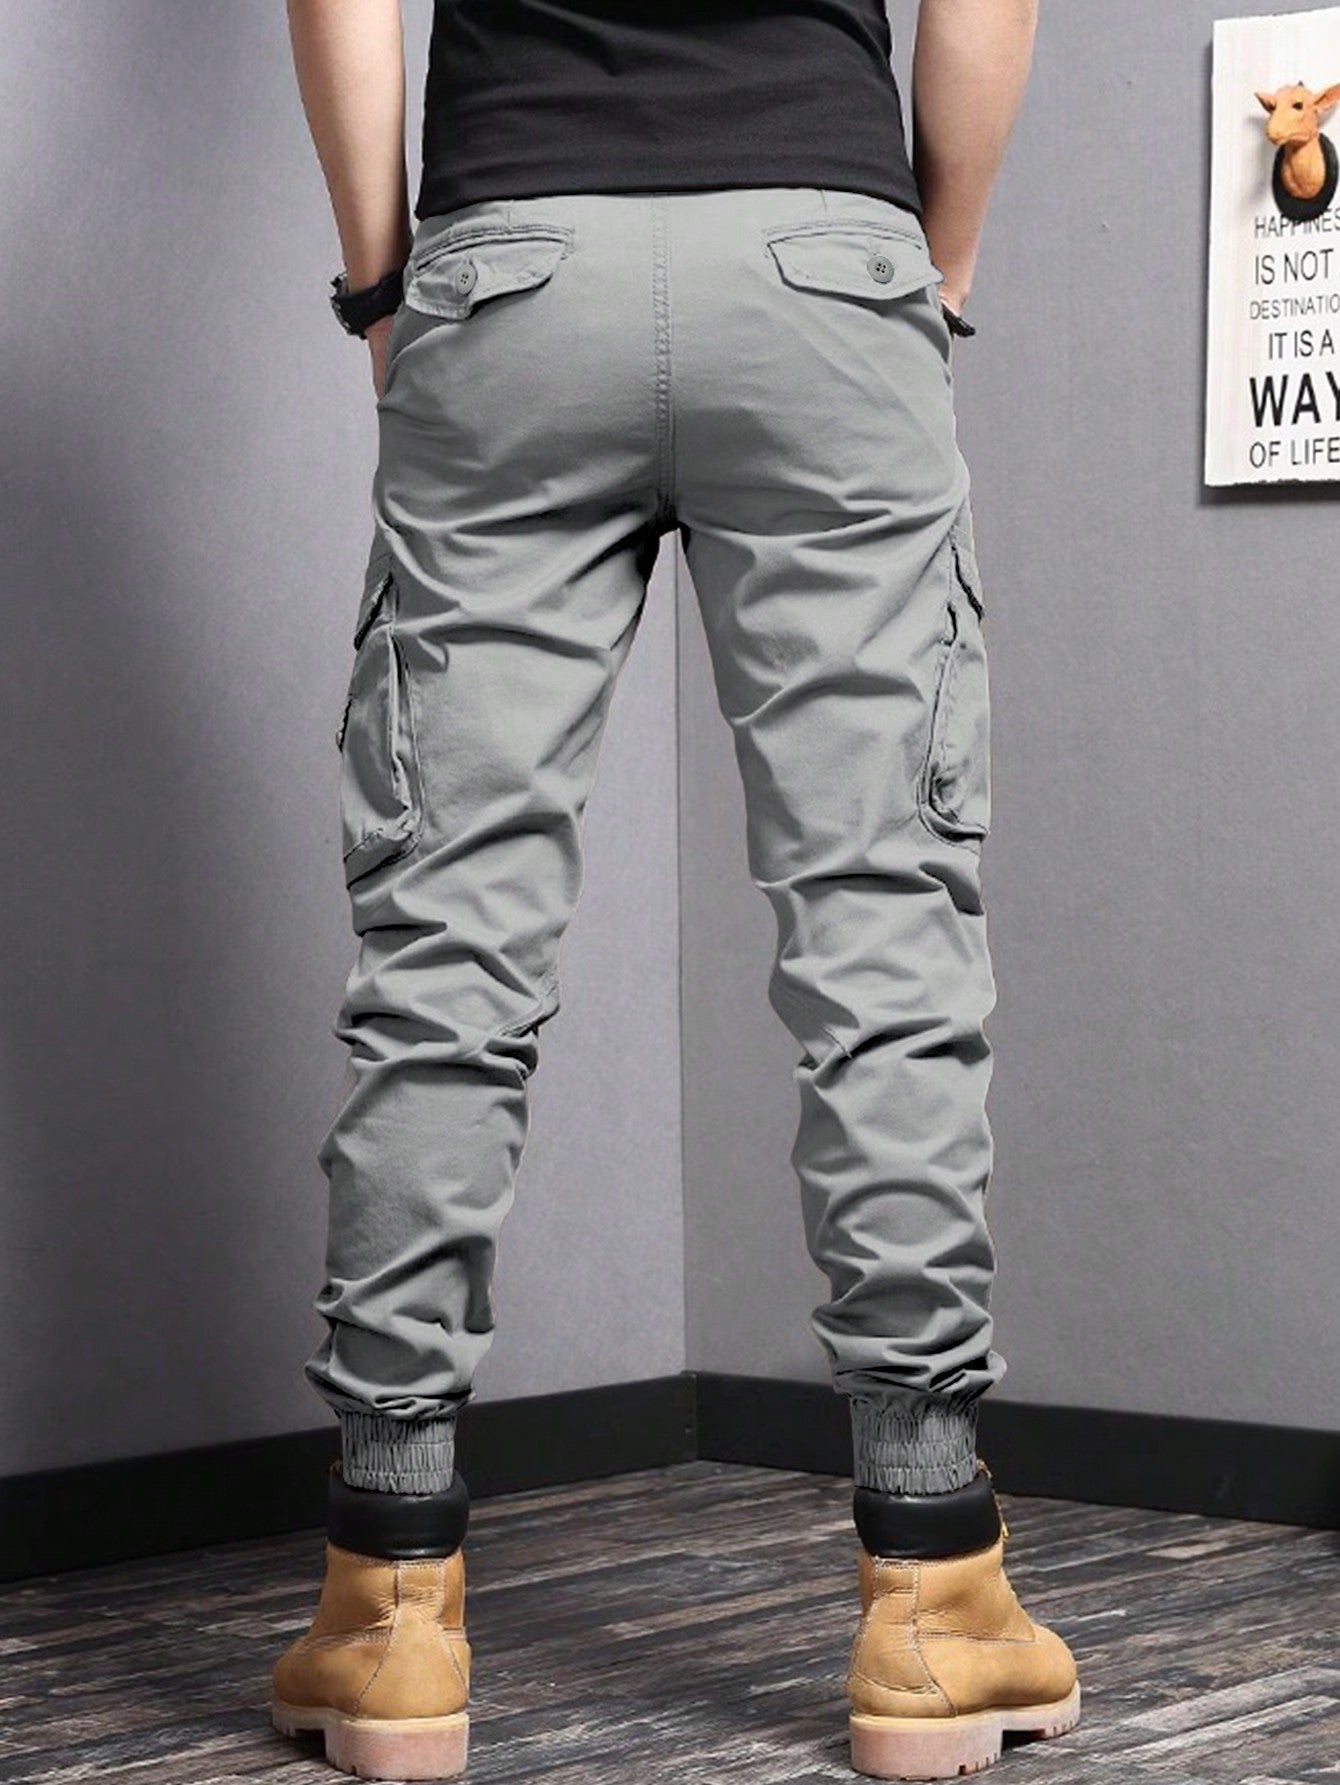 Manfinity EMRG Men's Workwear Tapered Pants